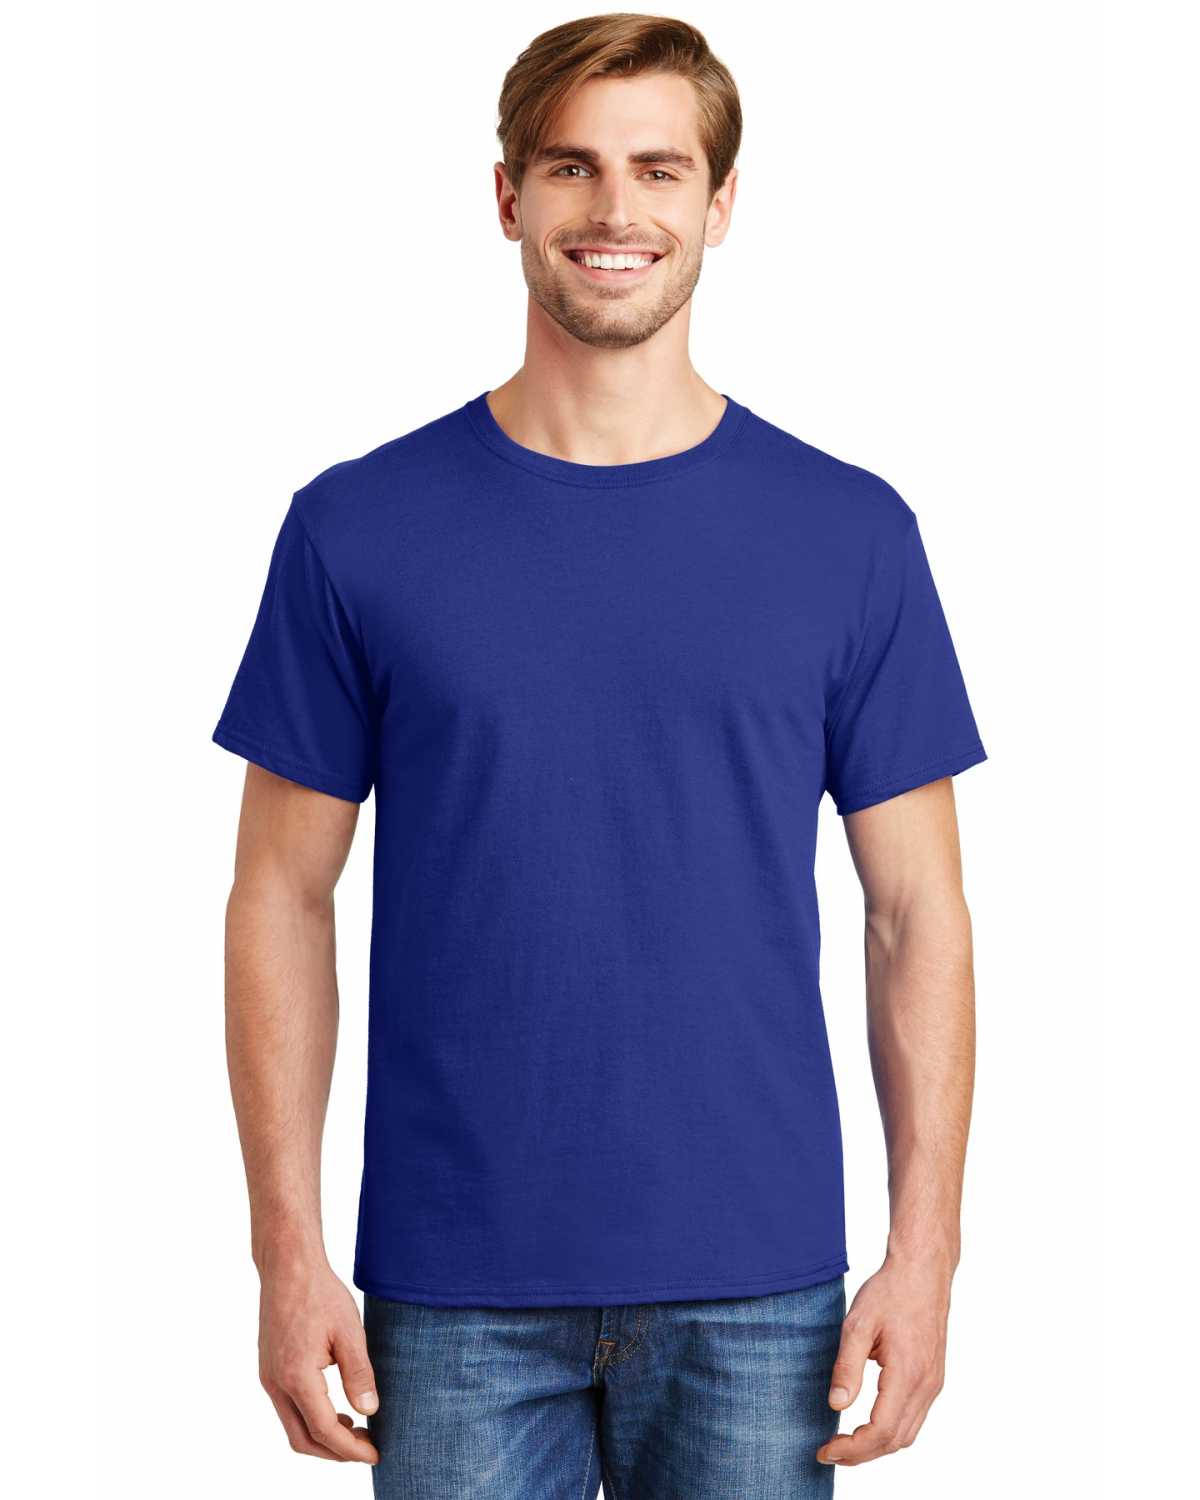 Hanes 5280 ComfortSoft 100% Cotton T-Shirt on discount | ApparelChoice.com